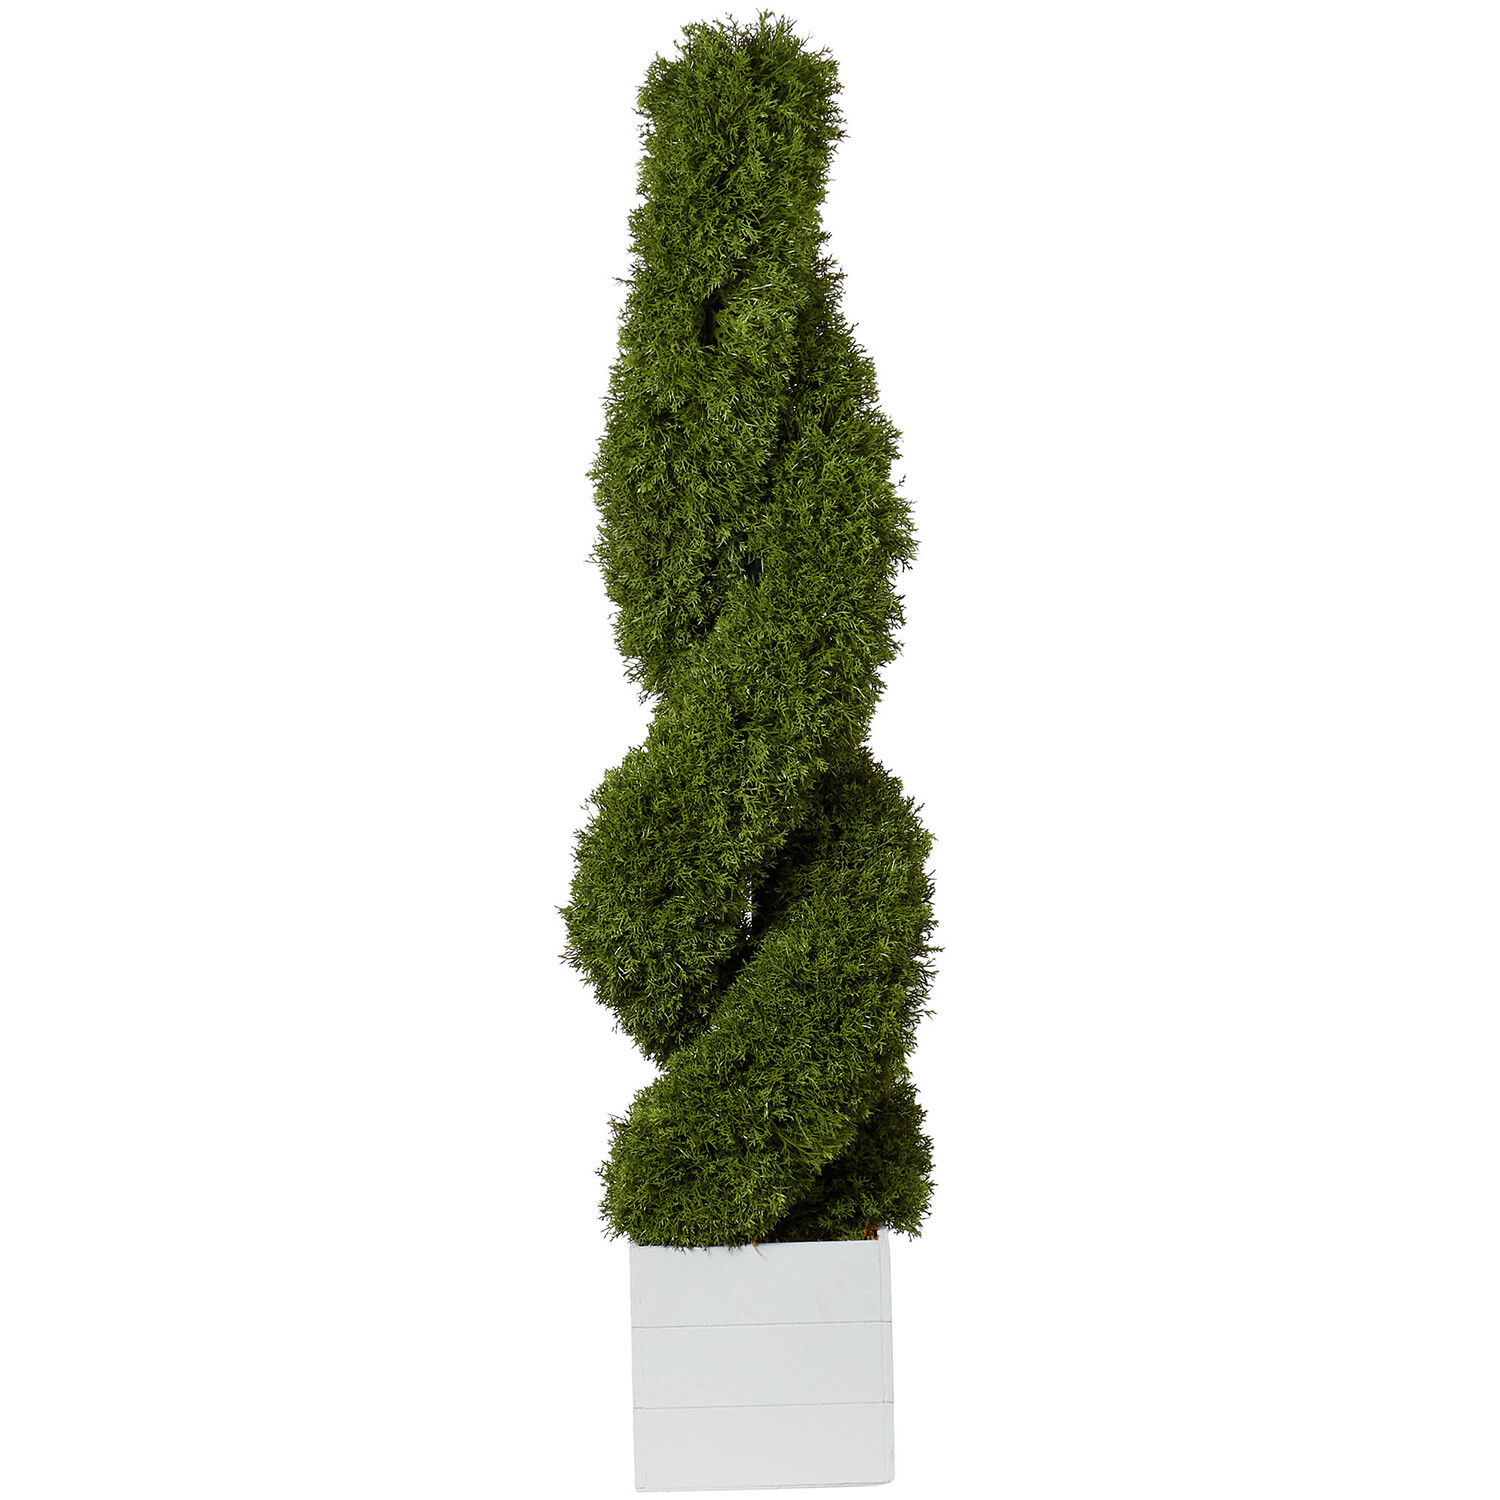 Cypress Spiral Tree - Green Image 1